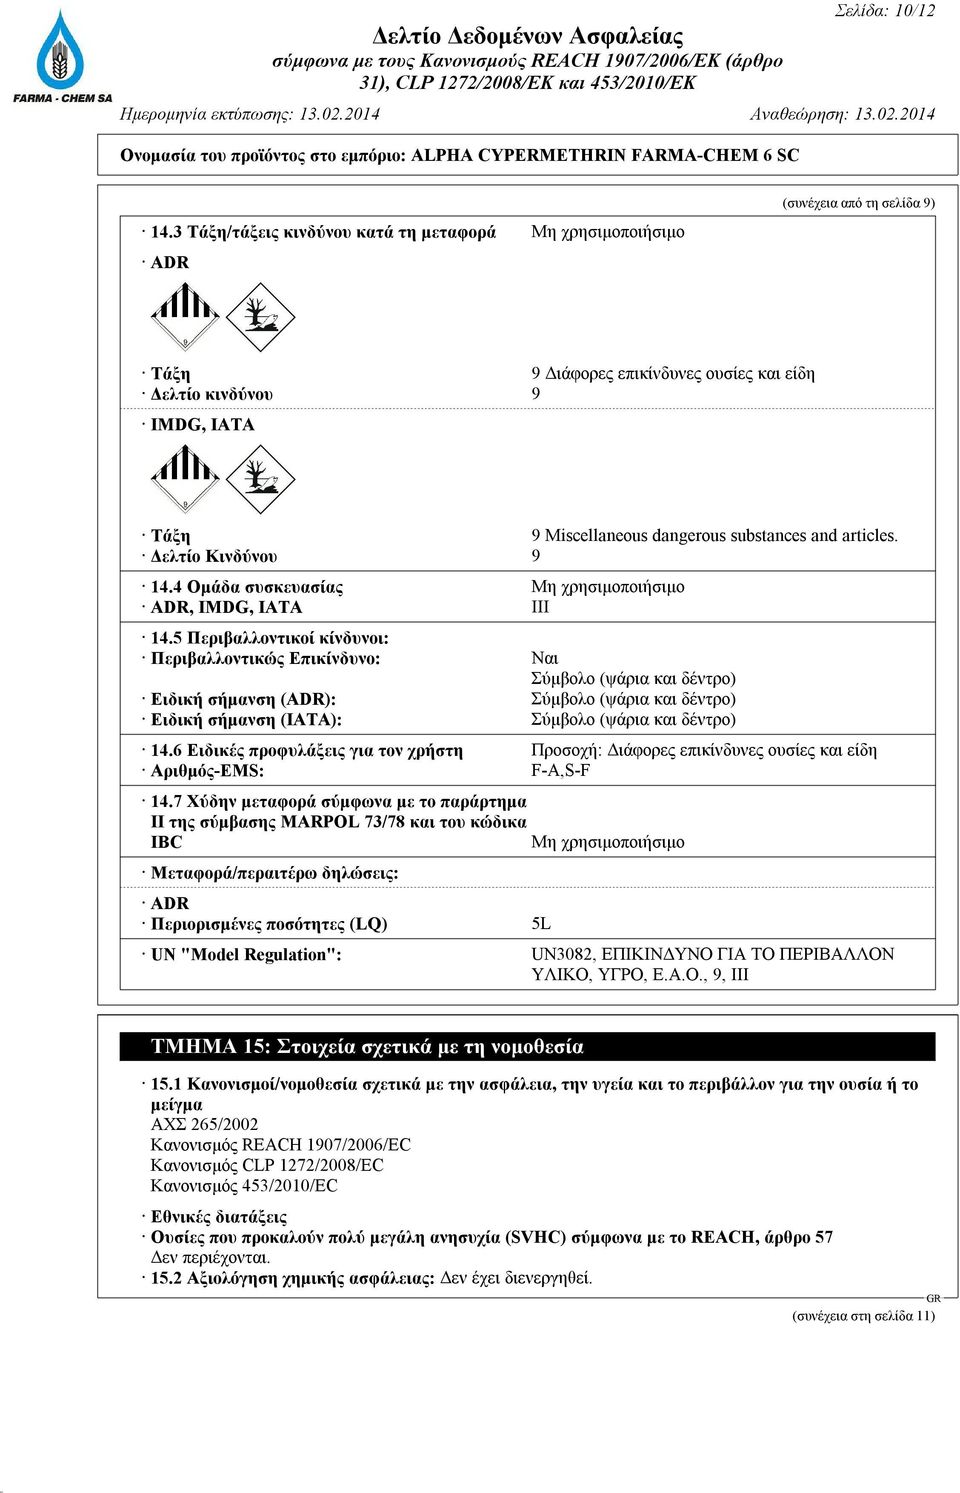 substances and articles. Δελτίο Κινδύνου 9 14.4 Ομάδα συσκευασίας Μη χρησιμοποιήσιμο ADR, IMDG, IATA III 14.